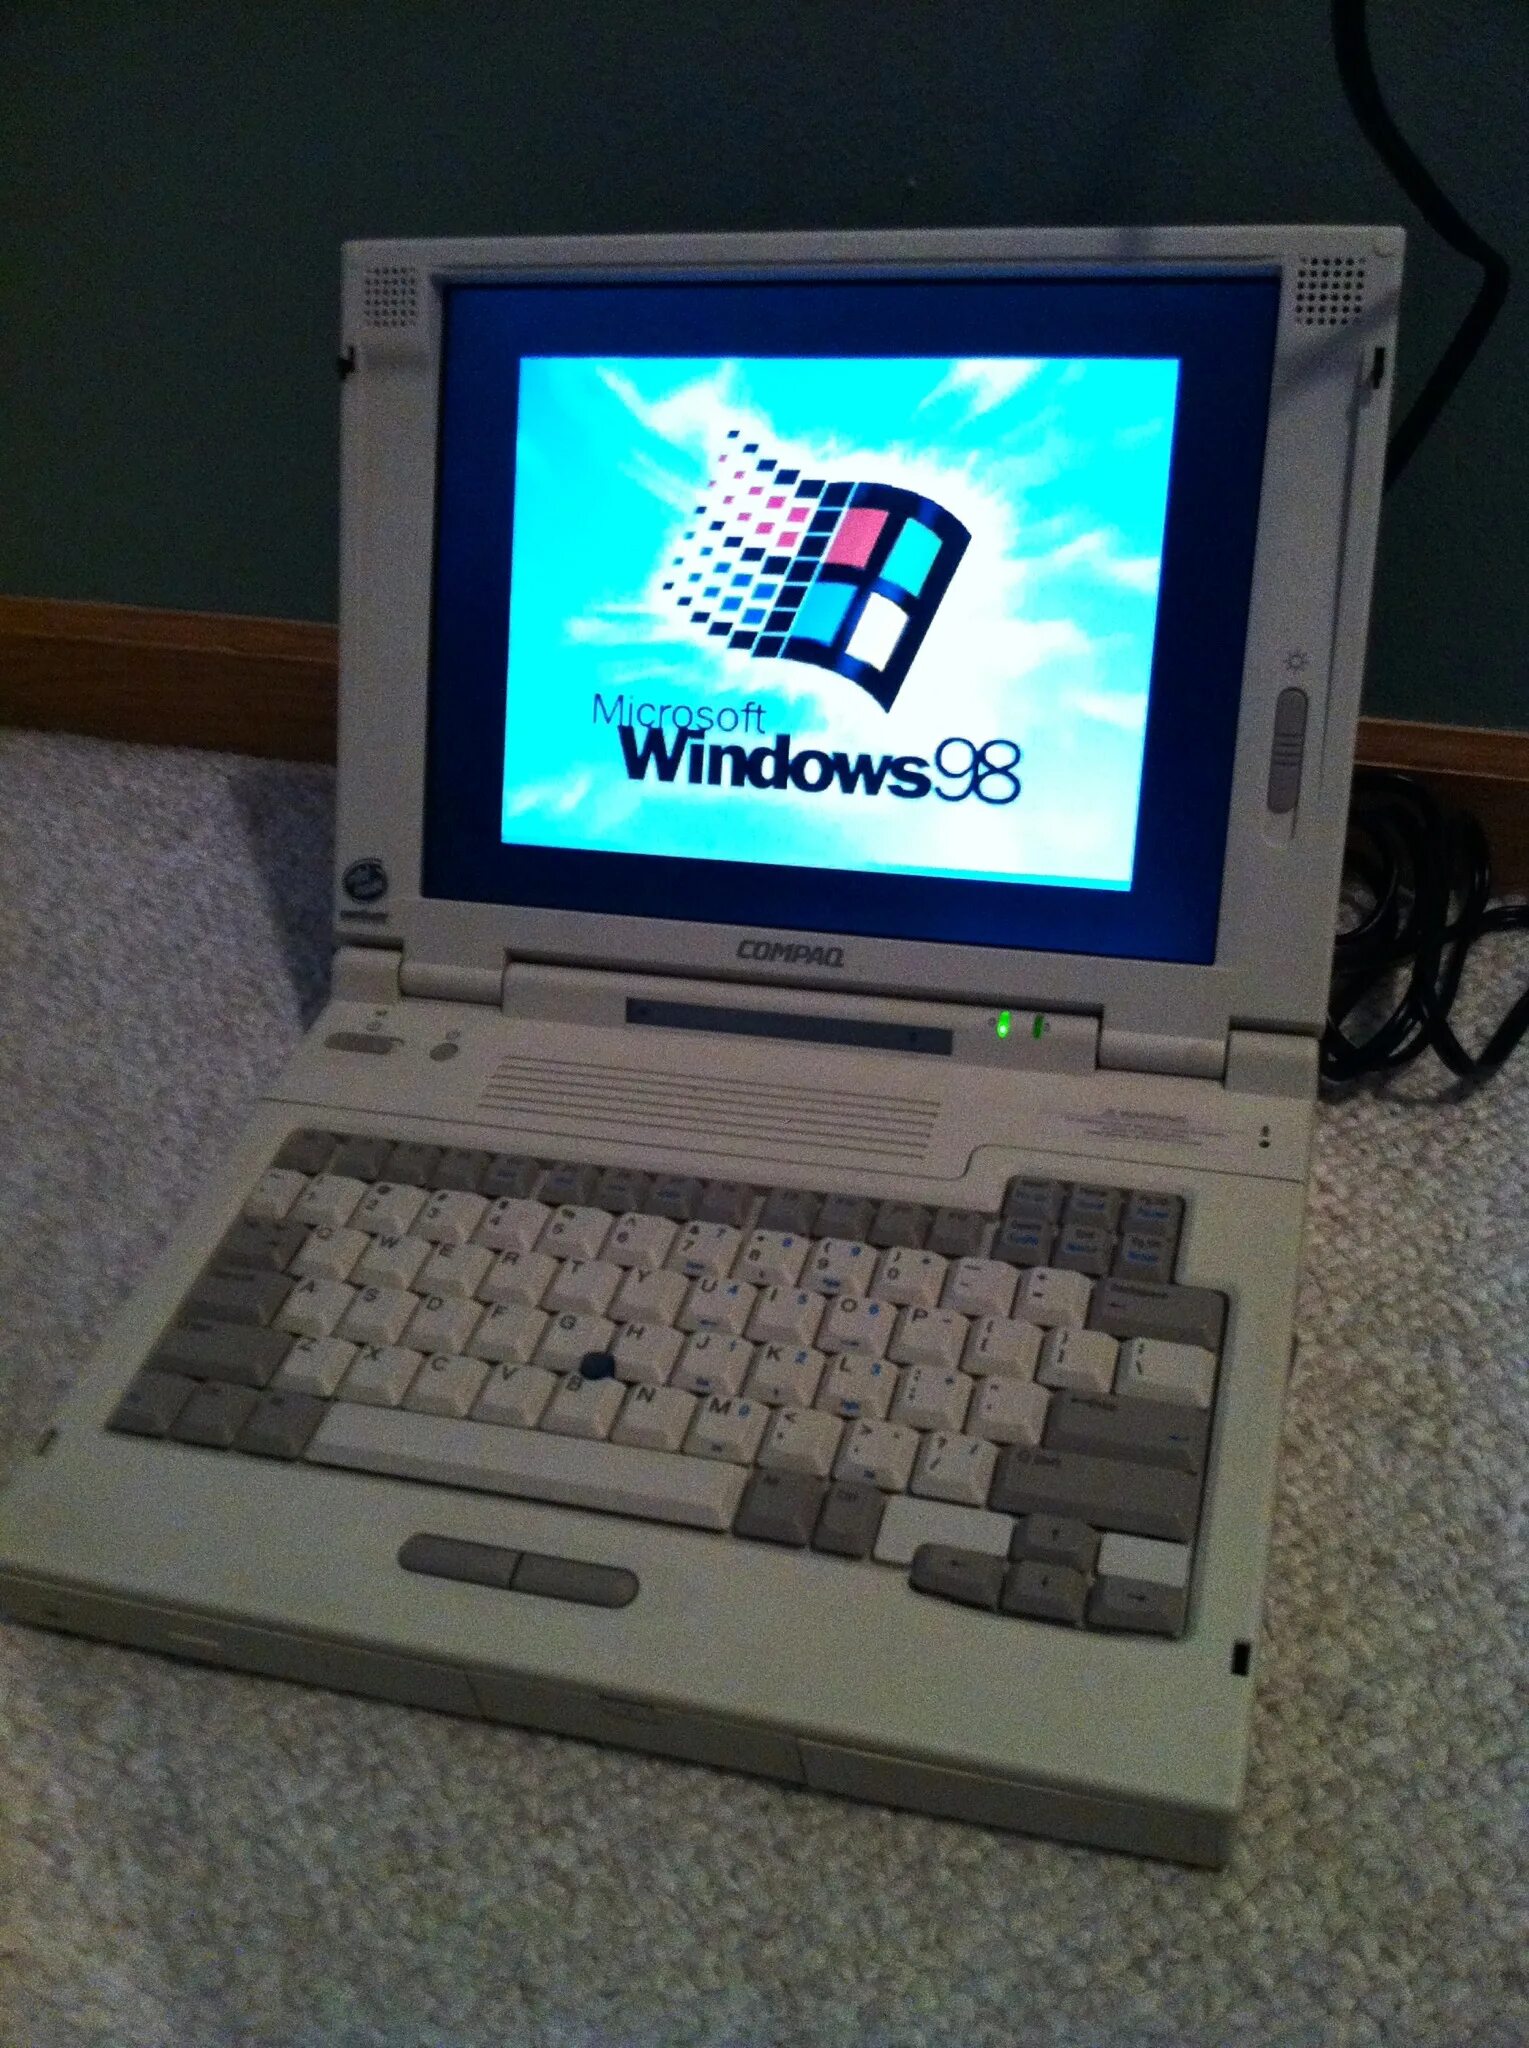 Компьютеры 98 года. Компьютер 98. Компьютер Windows 98. ПК 98 года. Windows 98 фото.